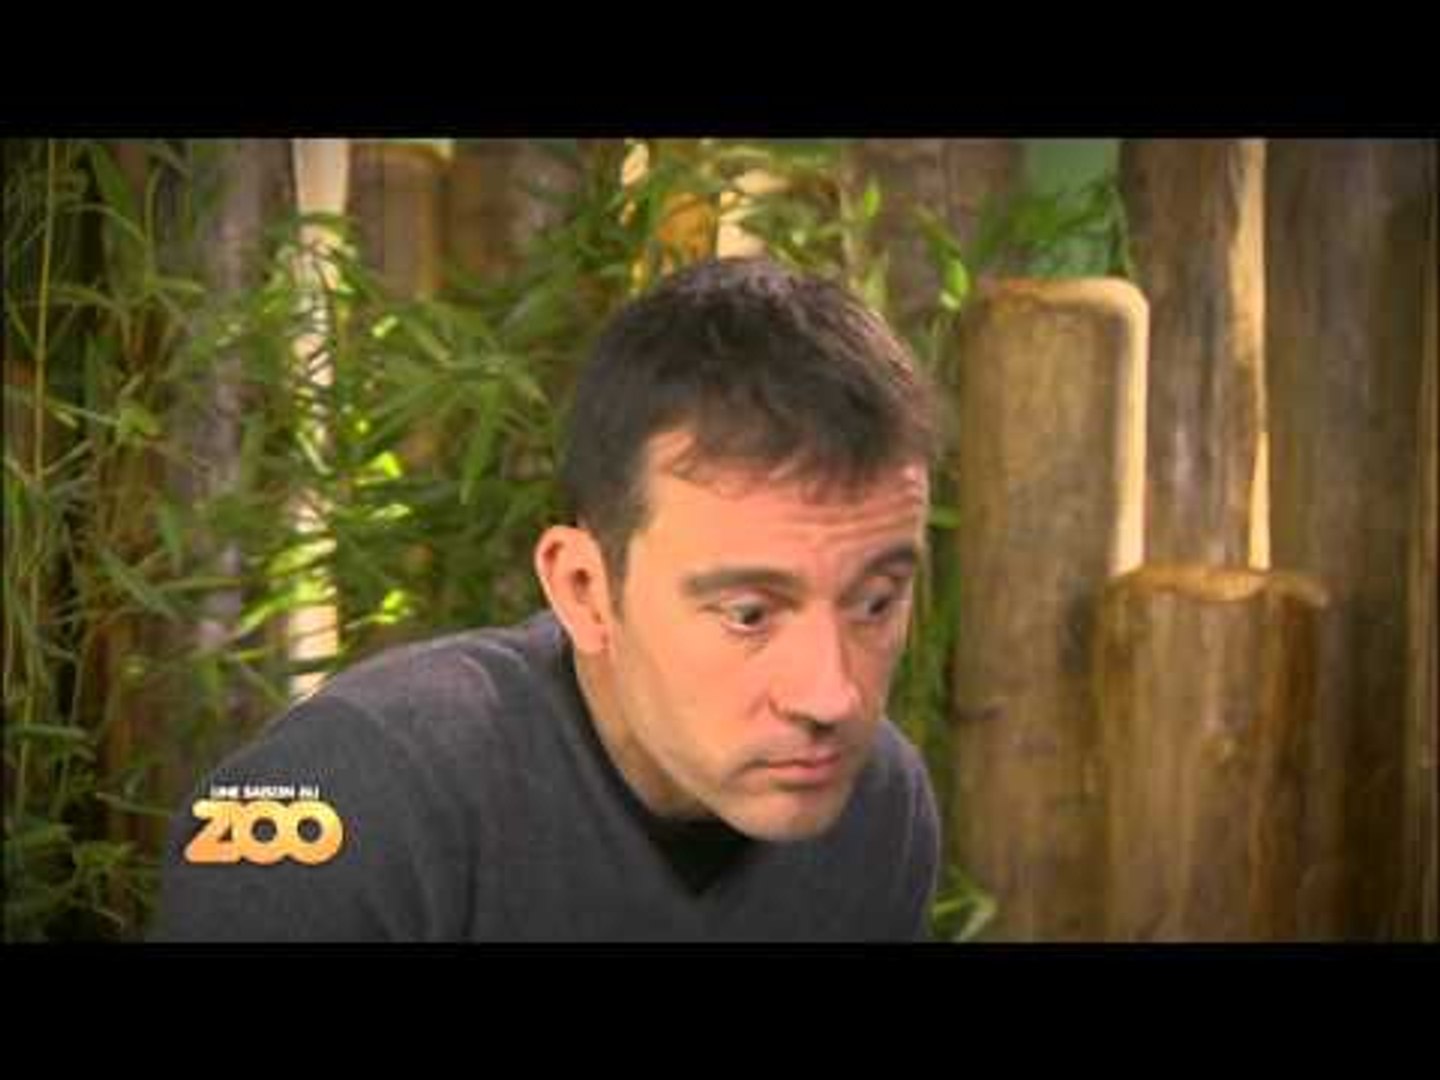 Une saison au zoo - Episode 13 (Saison 1) - Vidéo Dailymotion